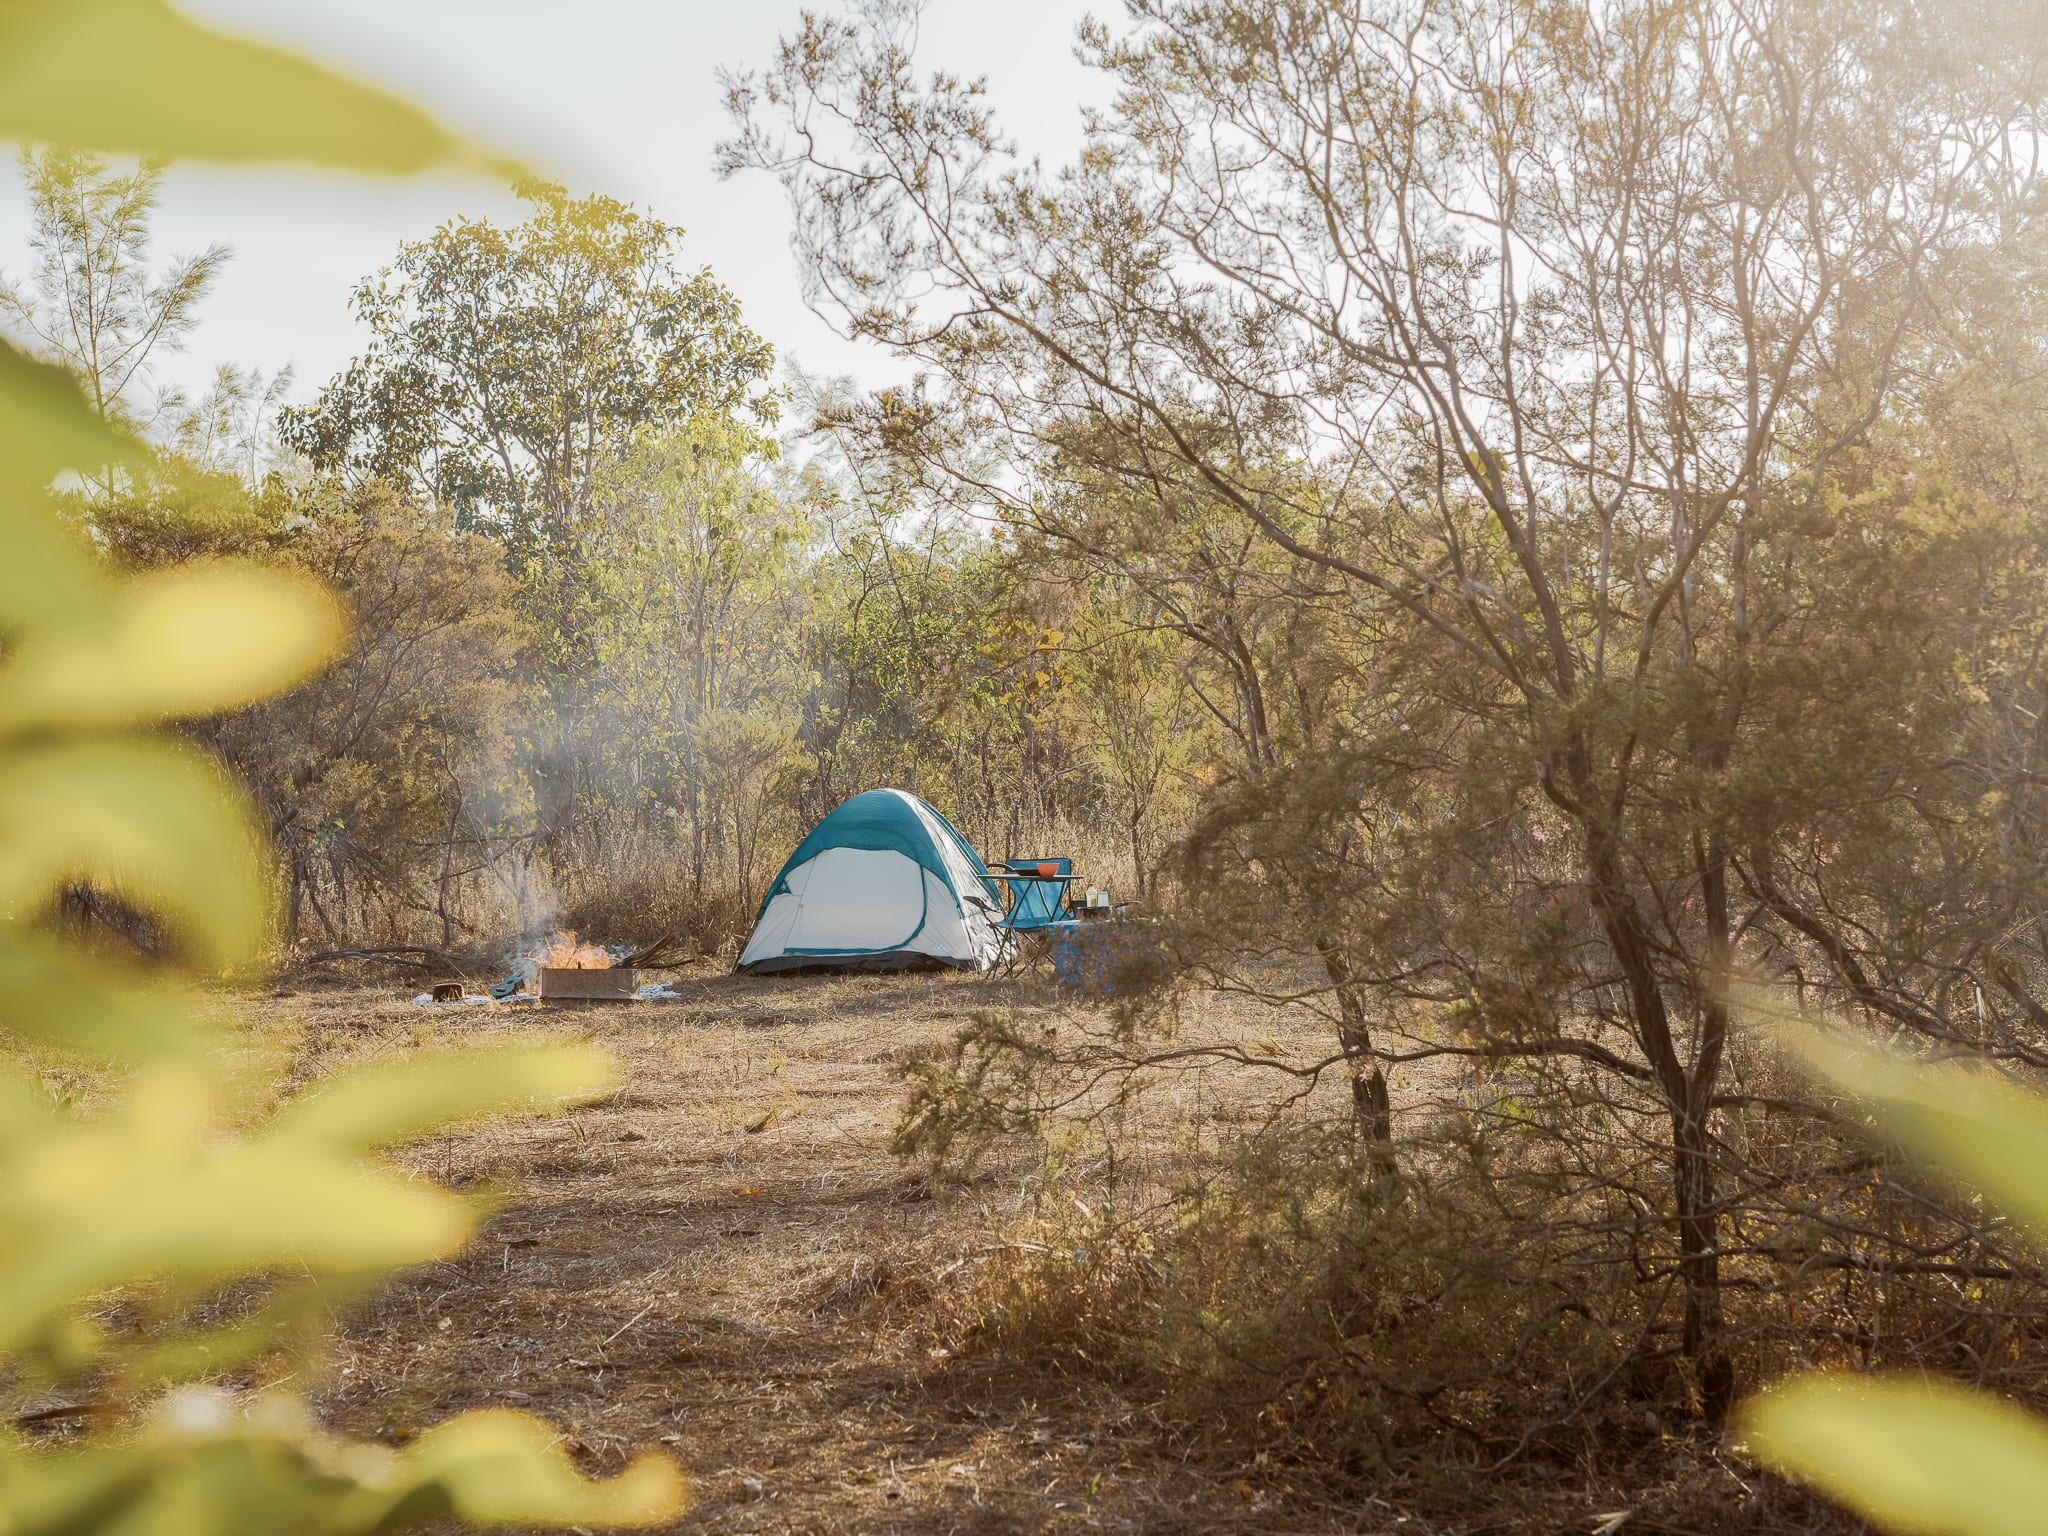 Bush camping at its finest.